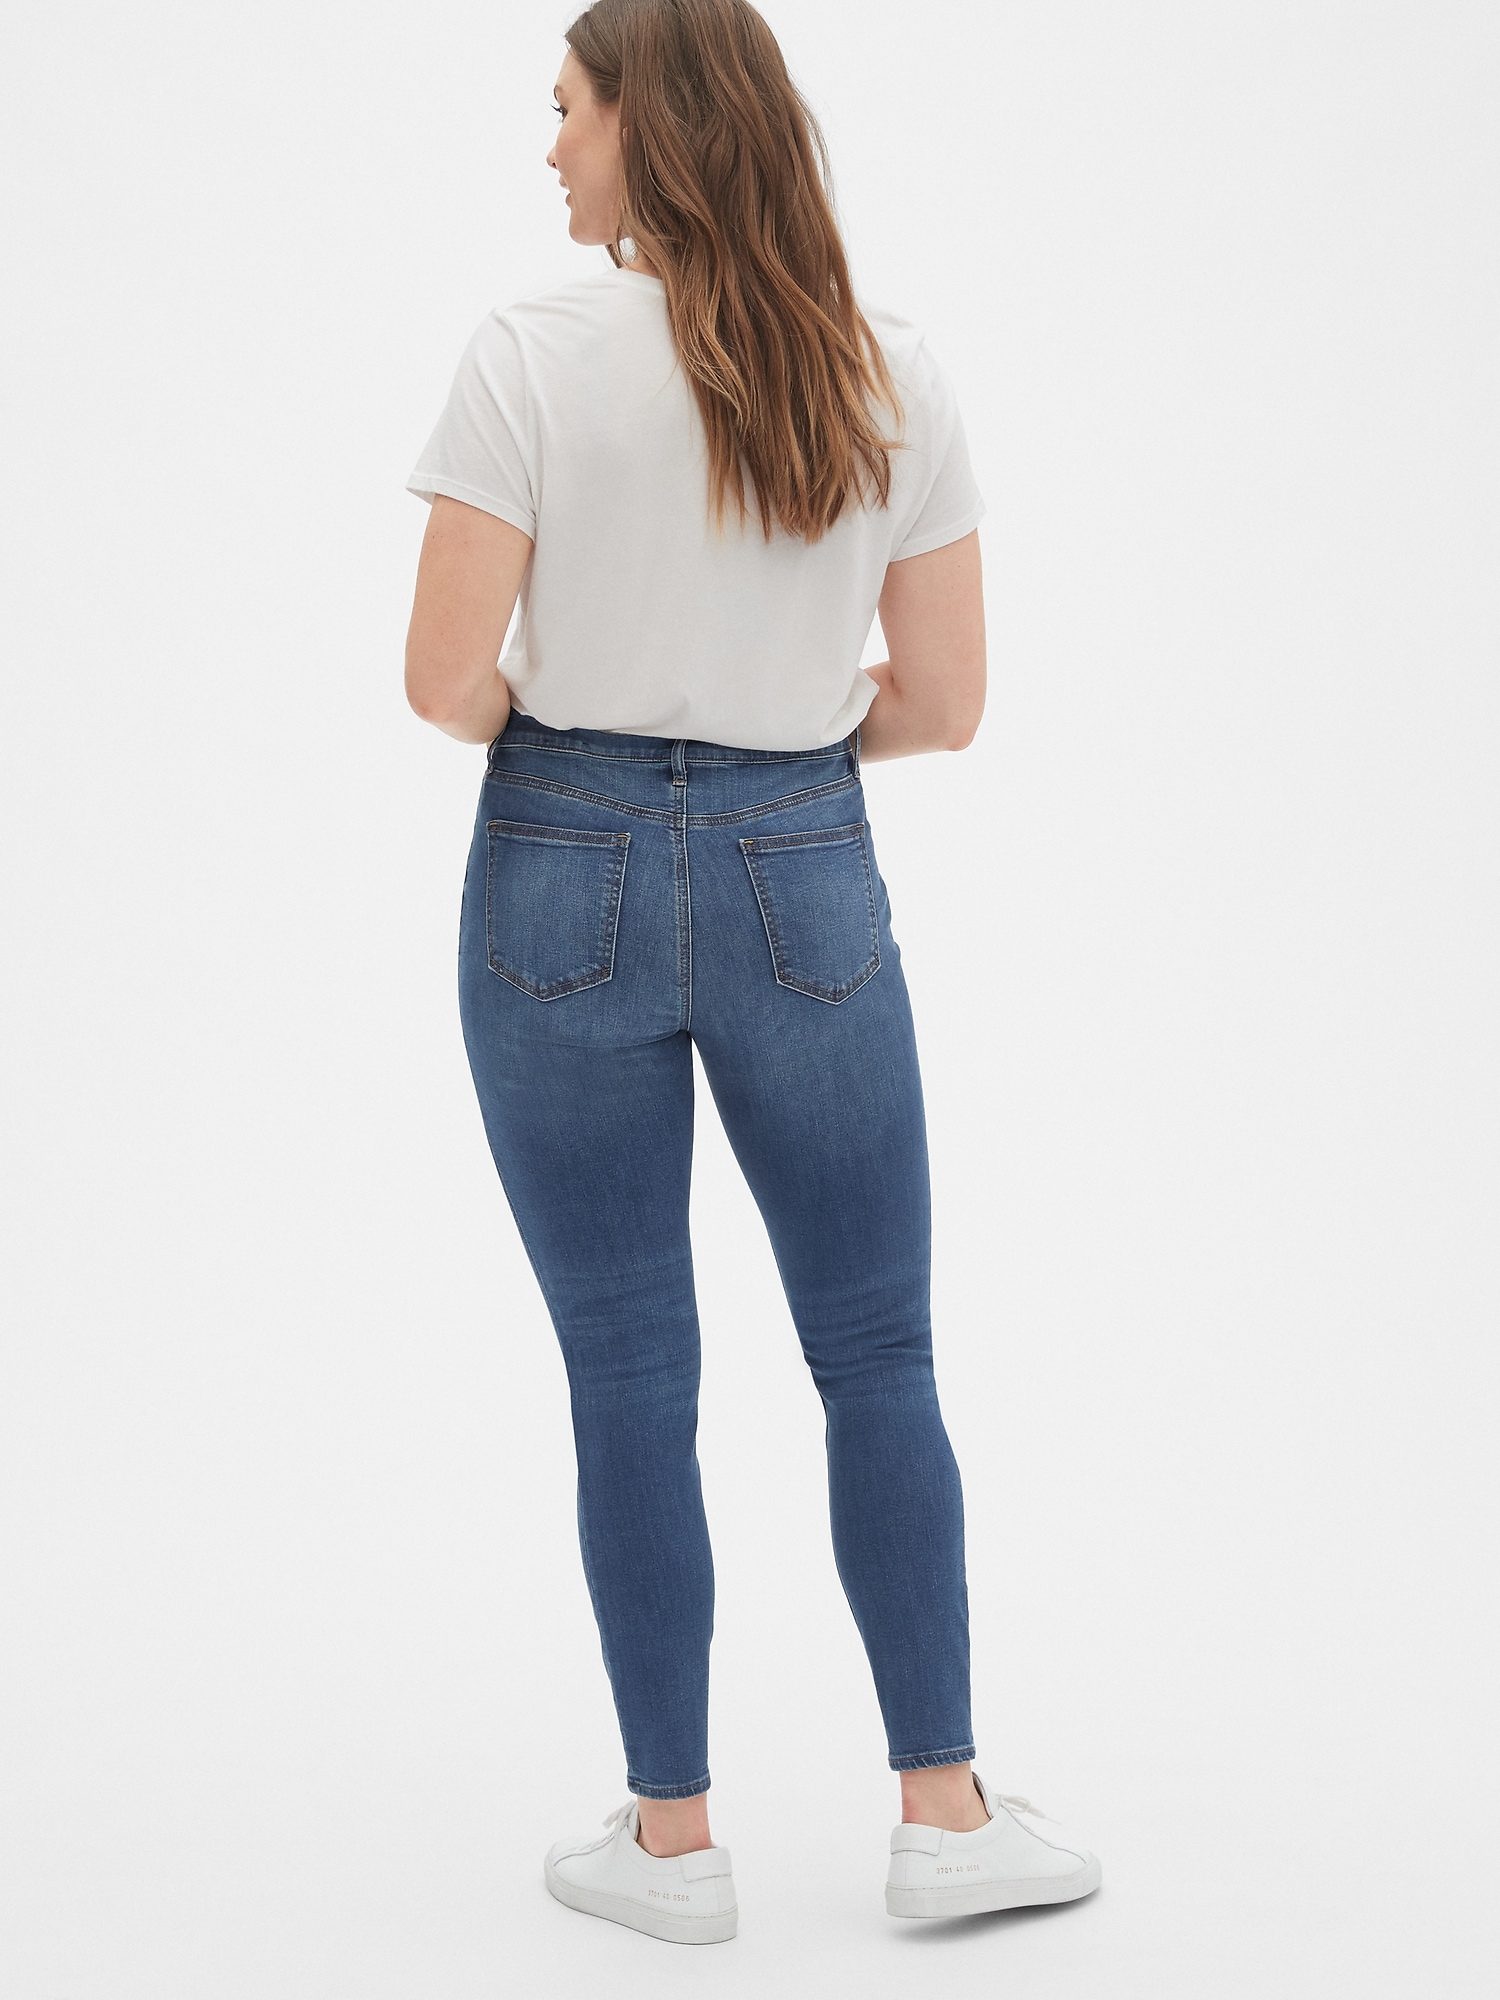 Women`s New Ex-GAP Mid Rise Skinny Jeans Sizes 6-8-10-12-14-16-18-20-22-24 